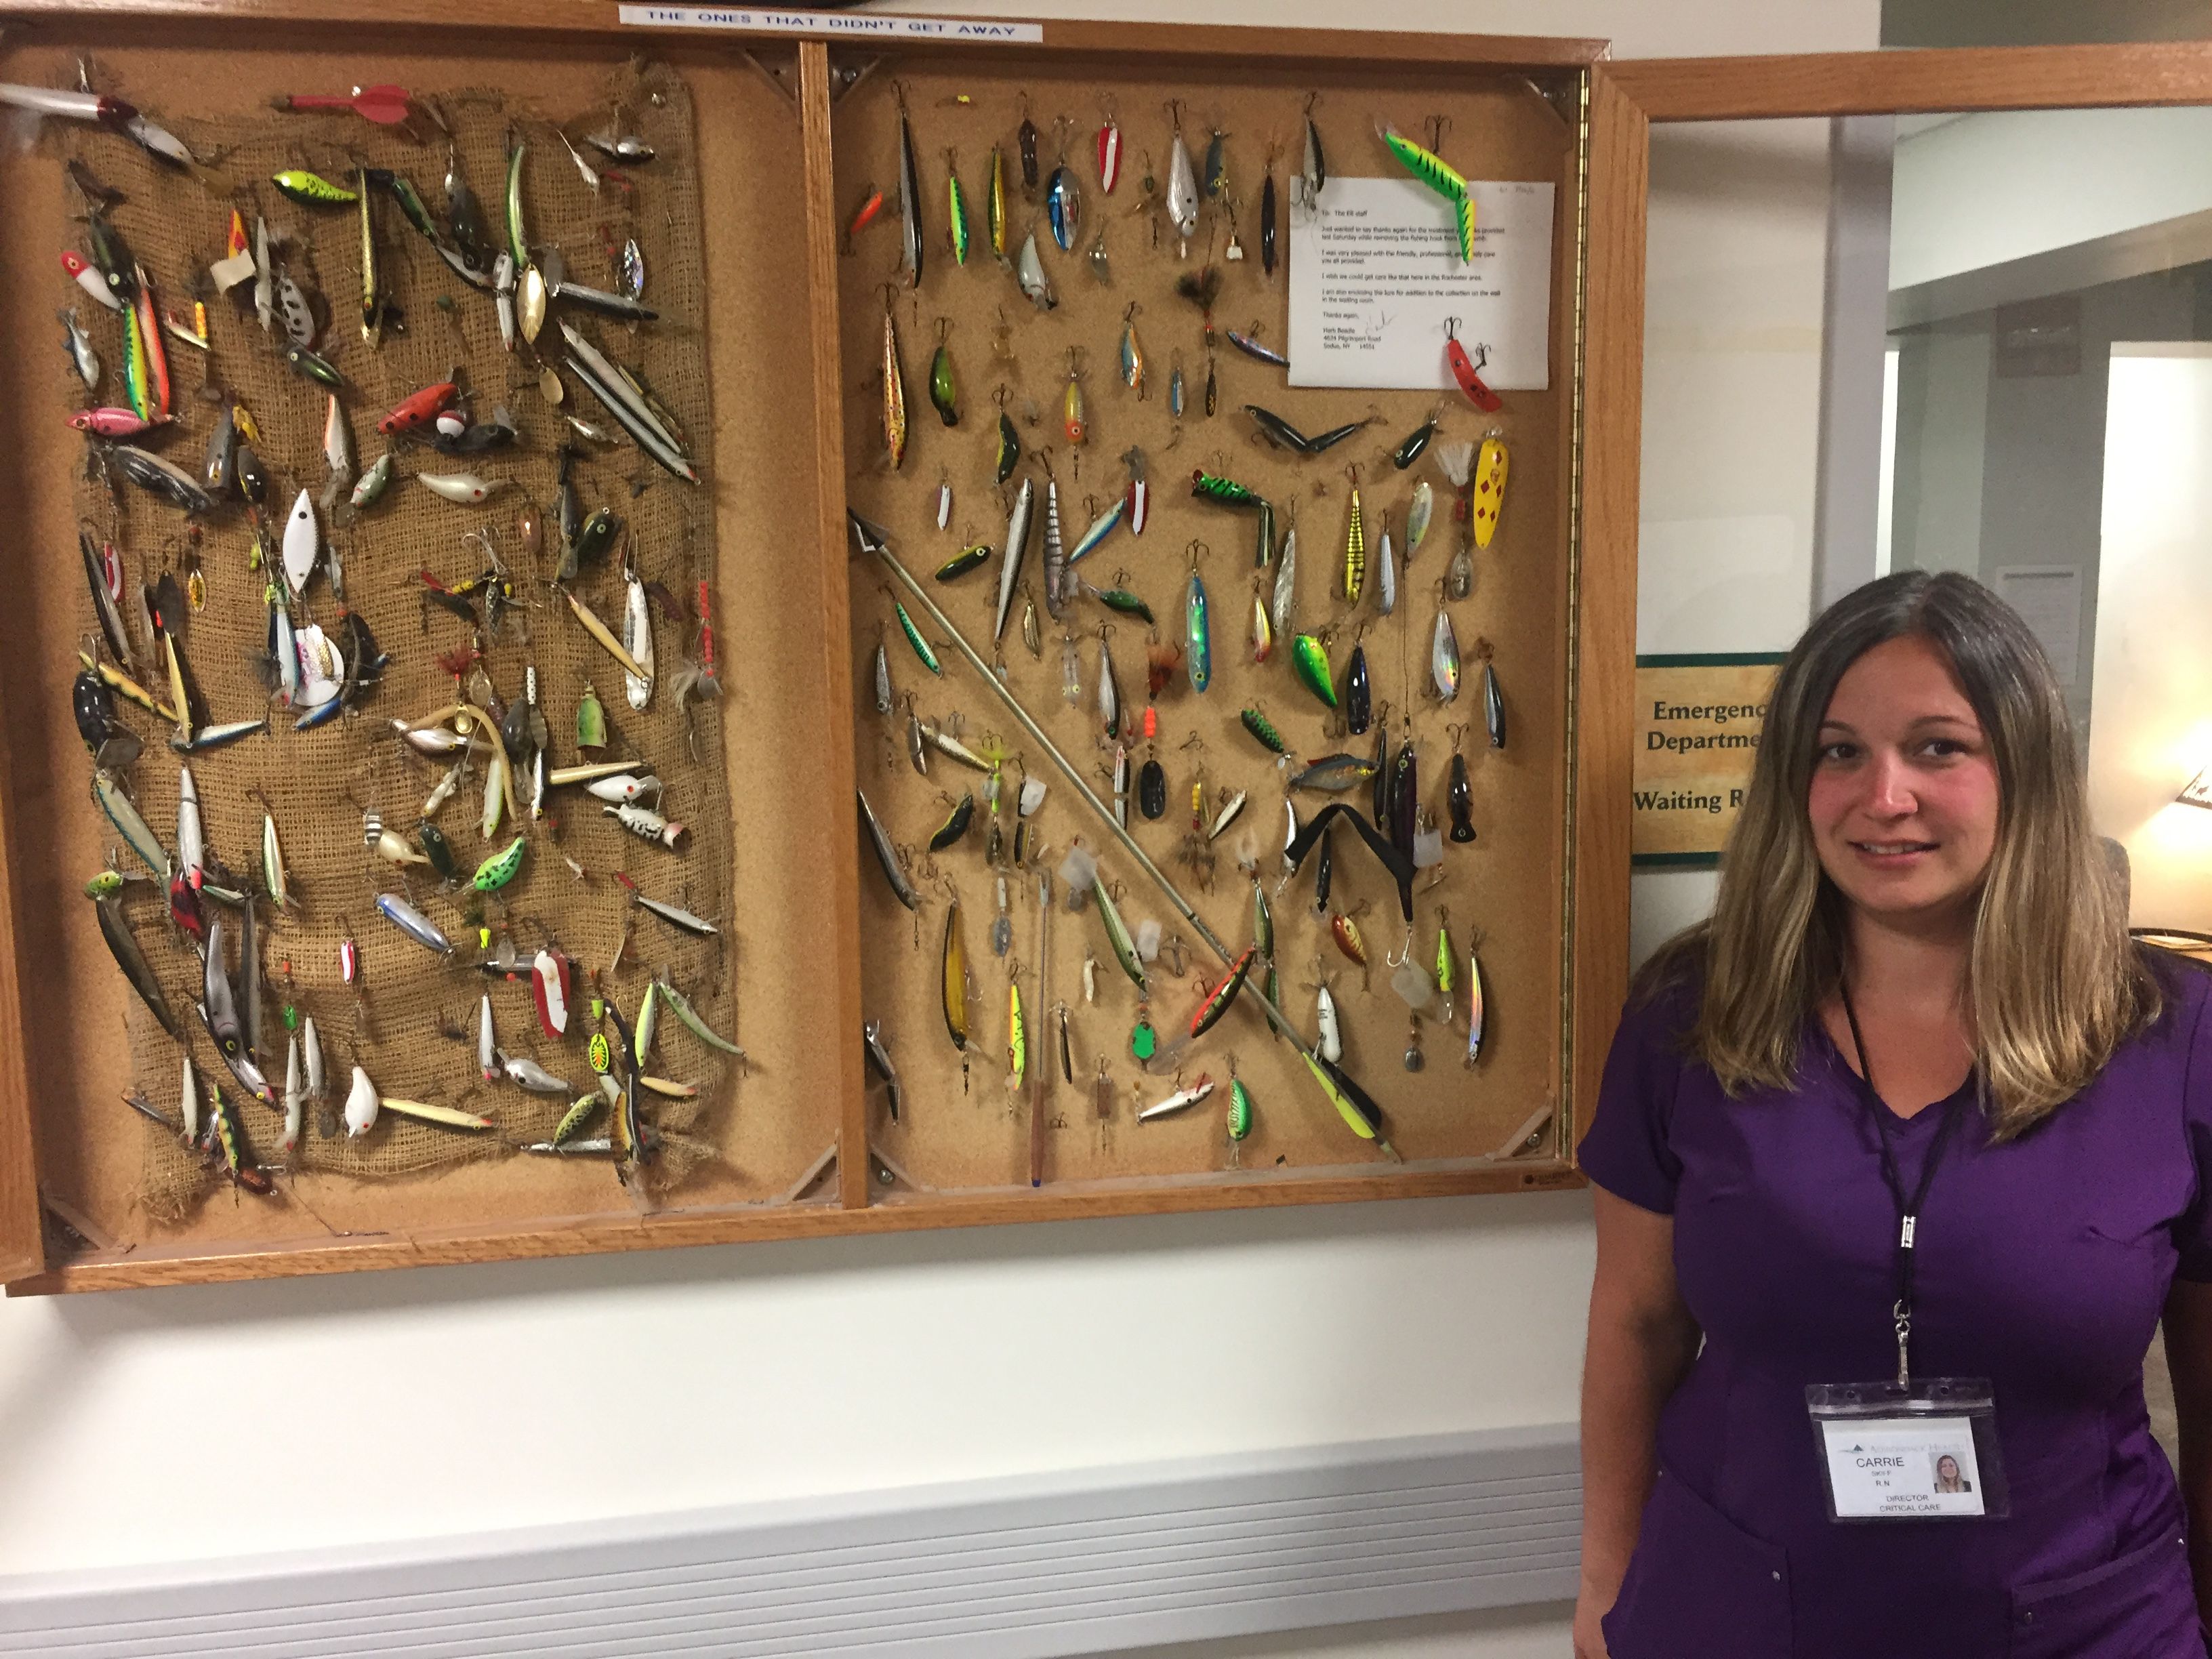 Painfully hooked: Adirondack hospital fishing lure display is no joke 